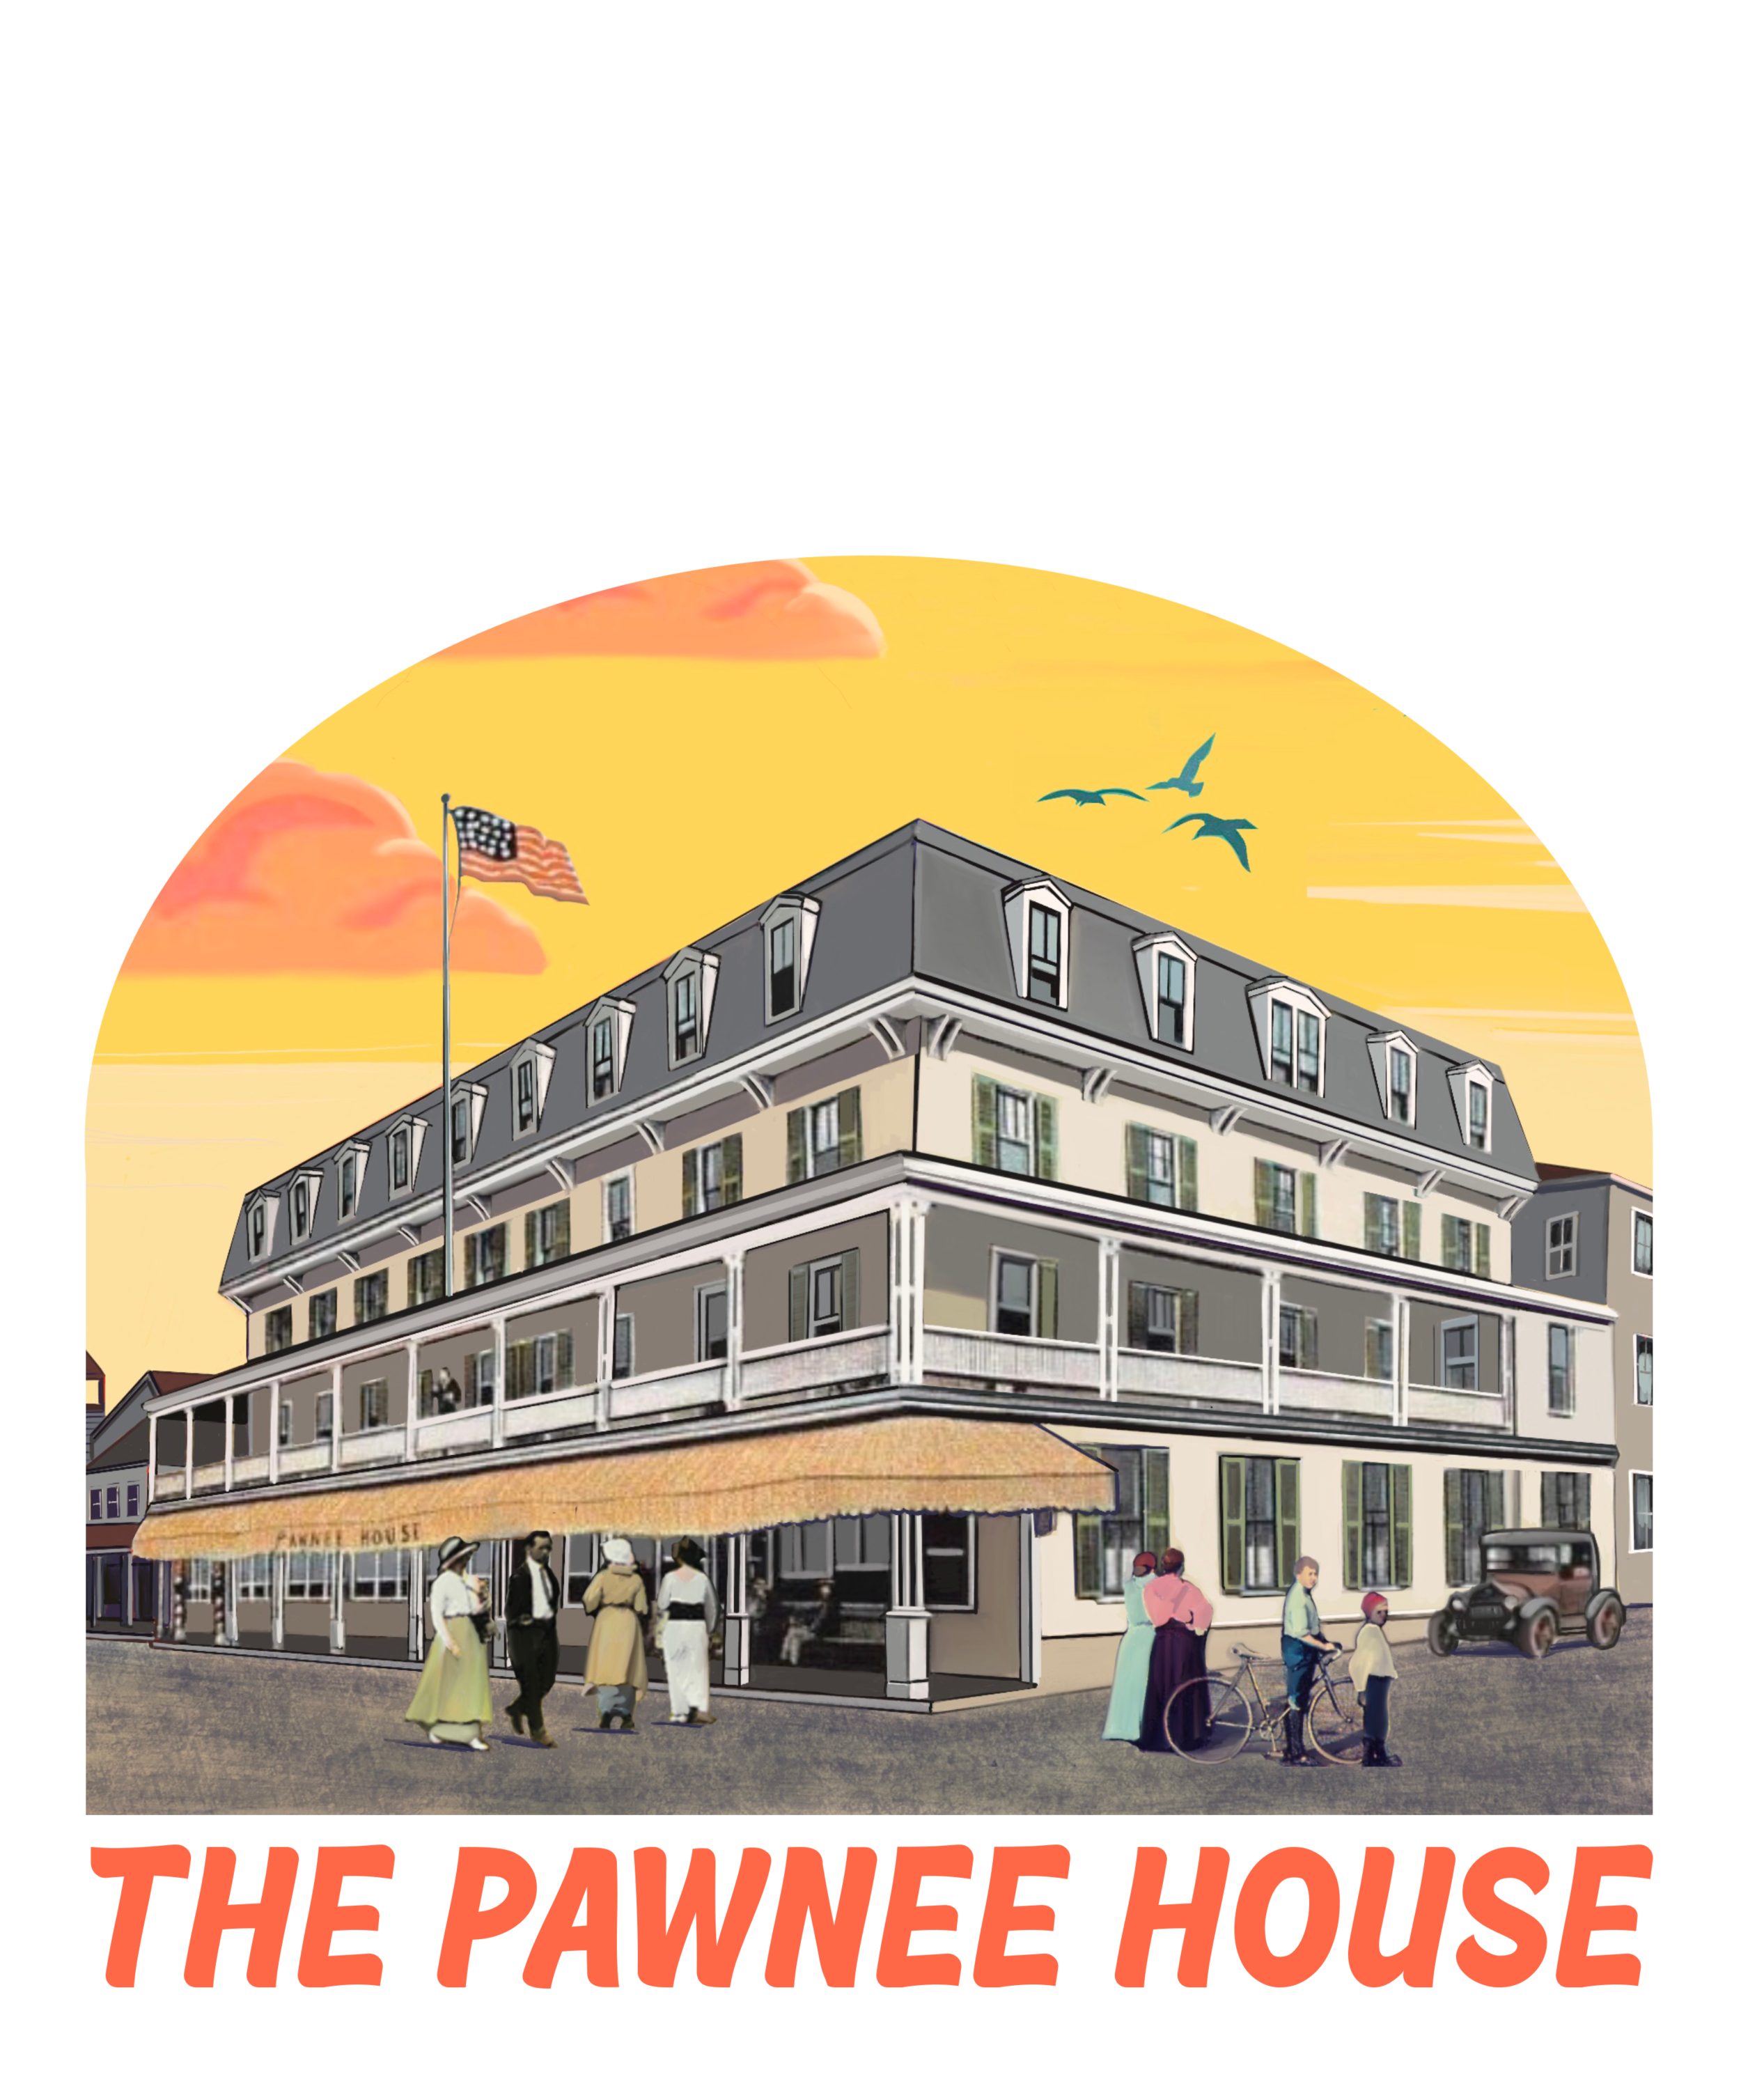 The Pawnee House